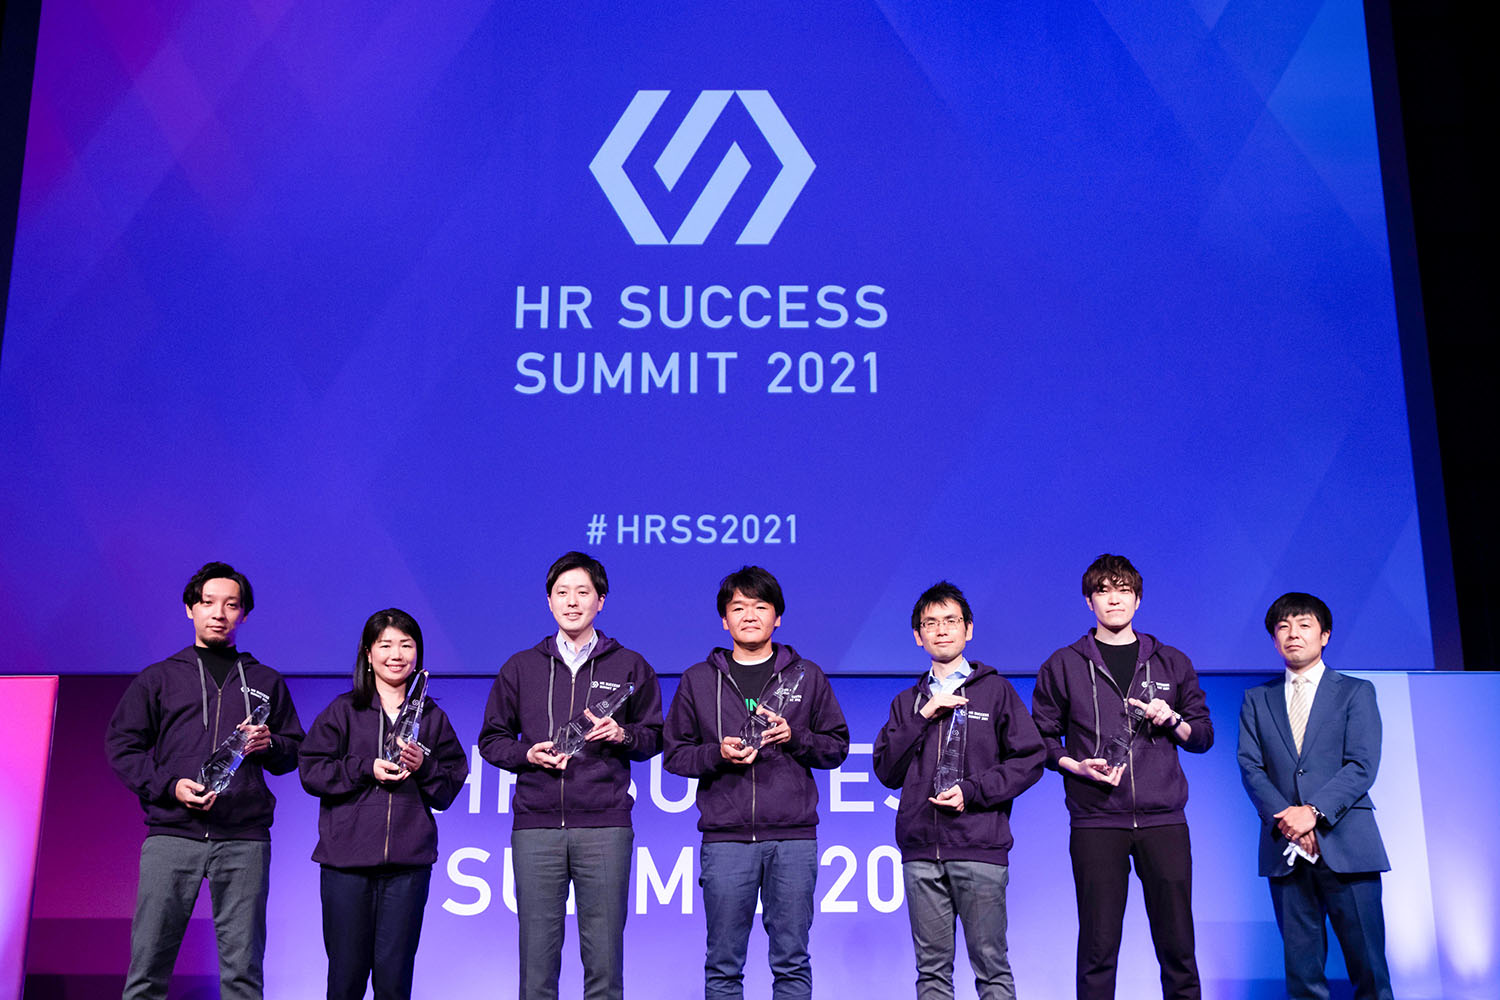 HR SUCCESS SUMMIT AWARD 2021 受賞者